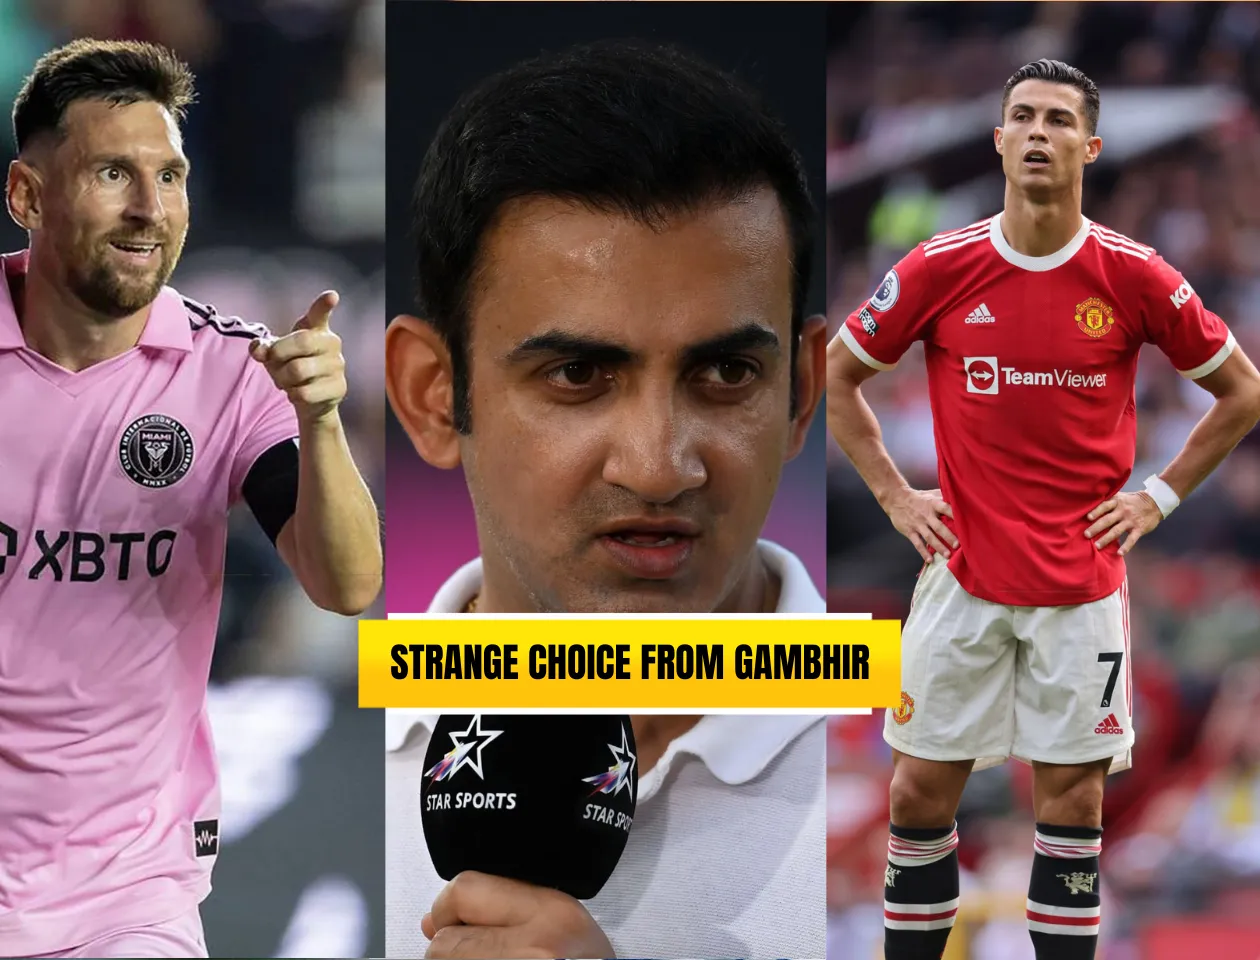 WATCH: Gautam Gambhir's surprise pick when asked about favourite football player